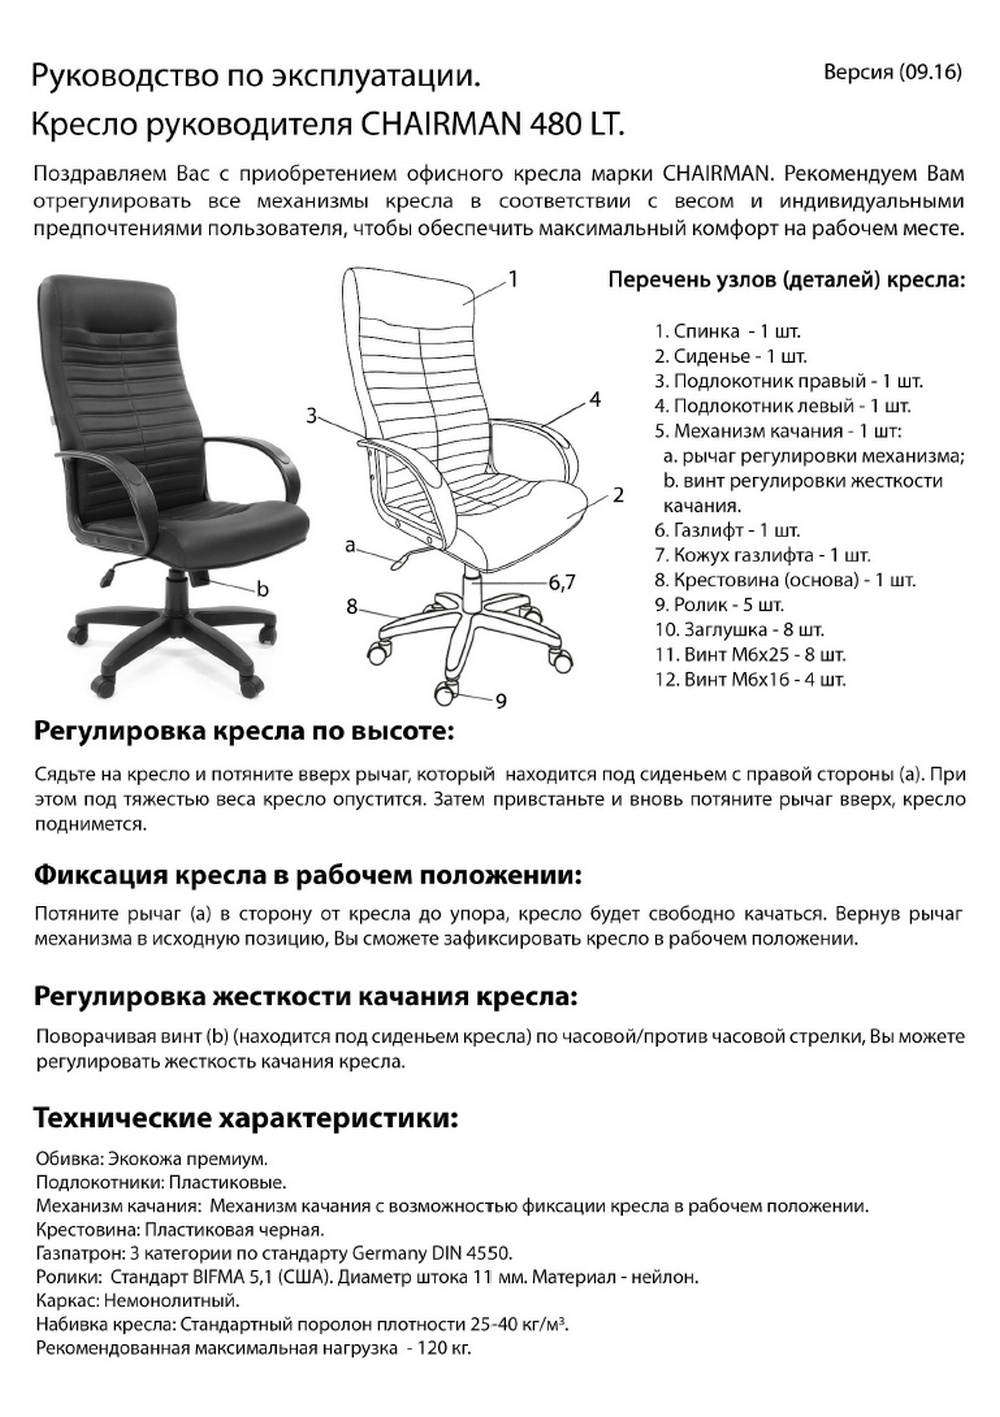 регулировка наклона спинки офисного кресла